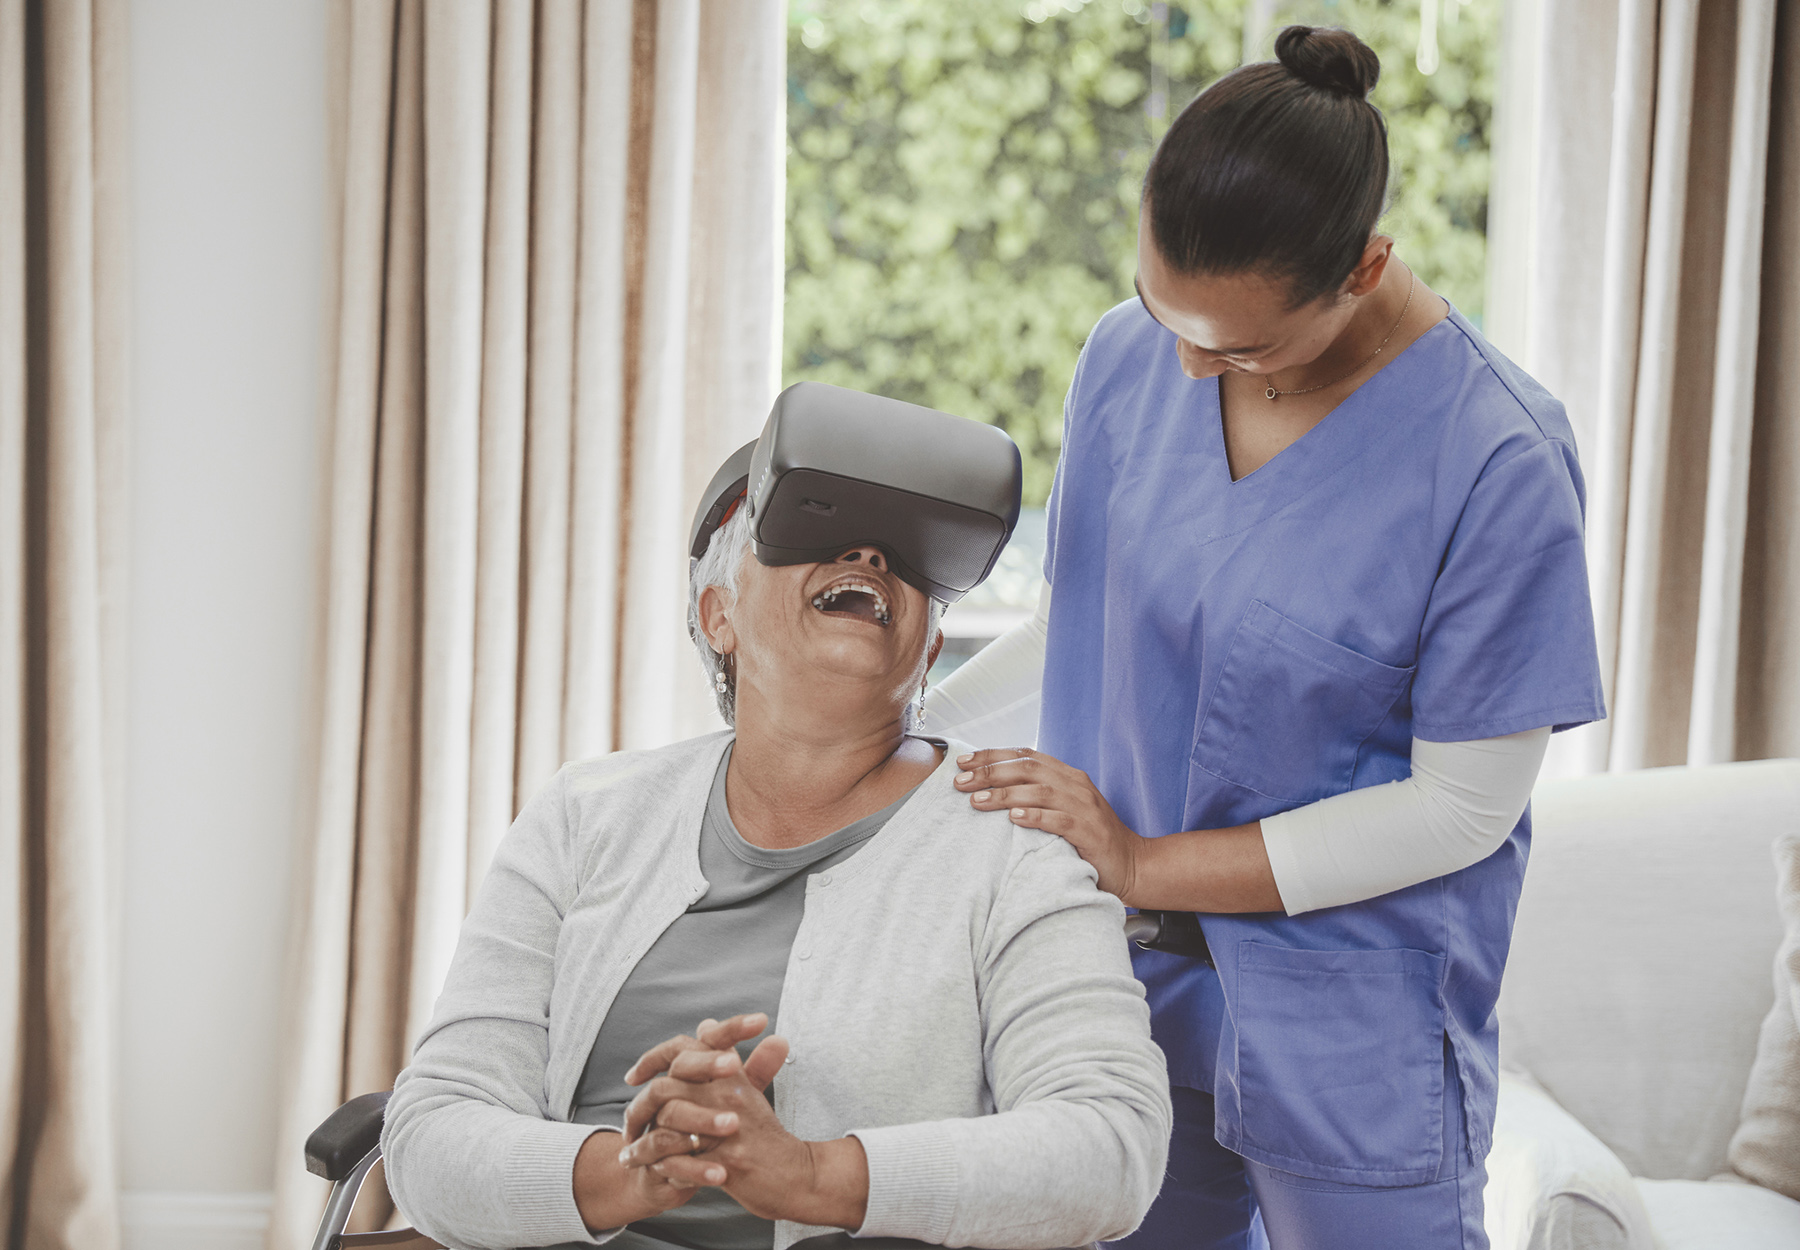 Old woman enjoying virtual reality simulator with her elder care nurse